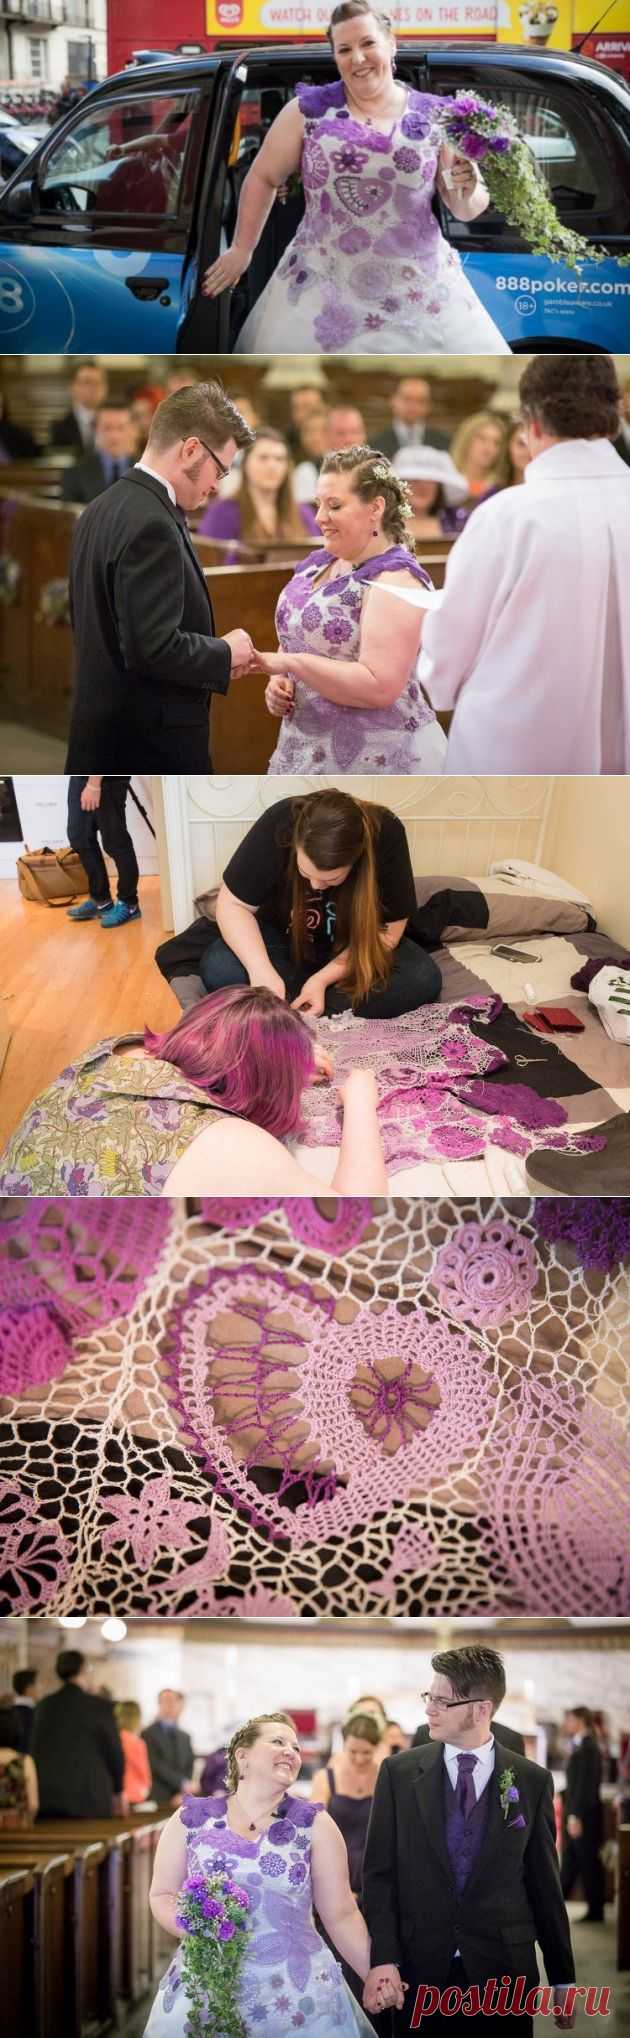 Bride Spent 1,000 Hours Creating Her Crocheted Wedding Dress - Yahoo